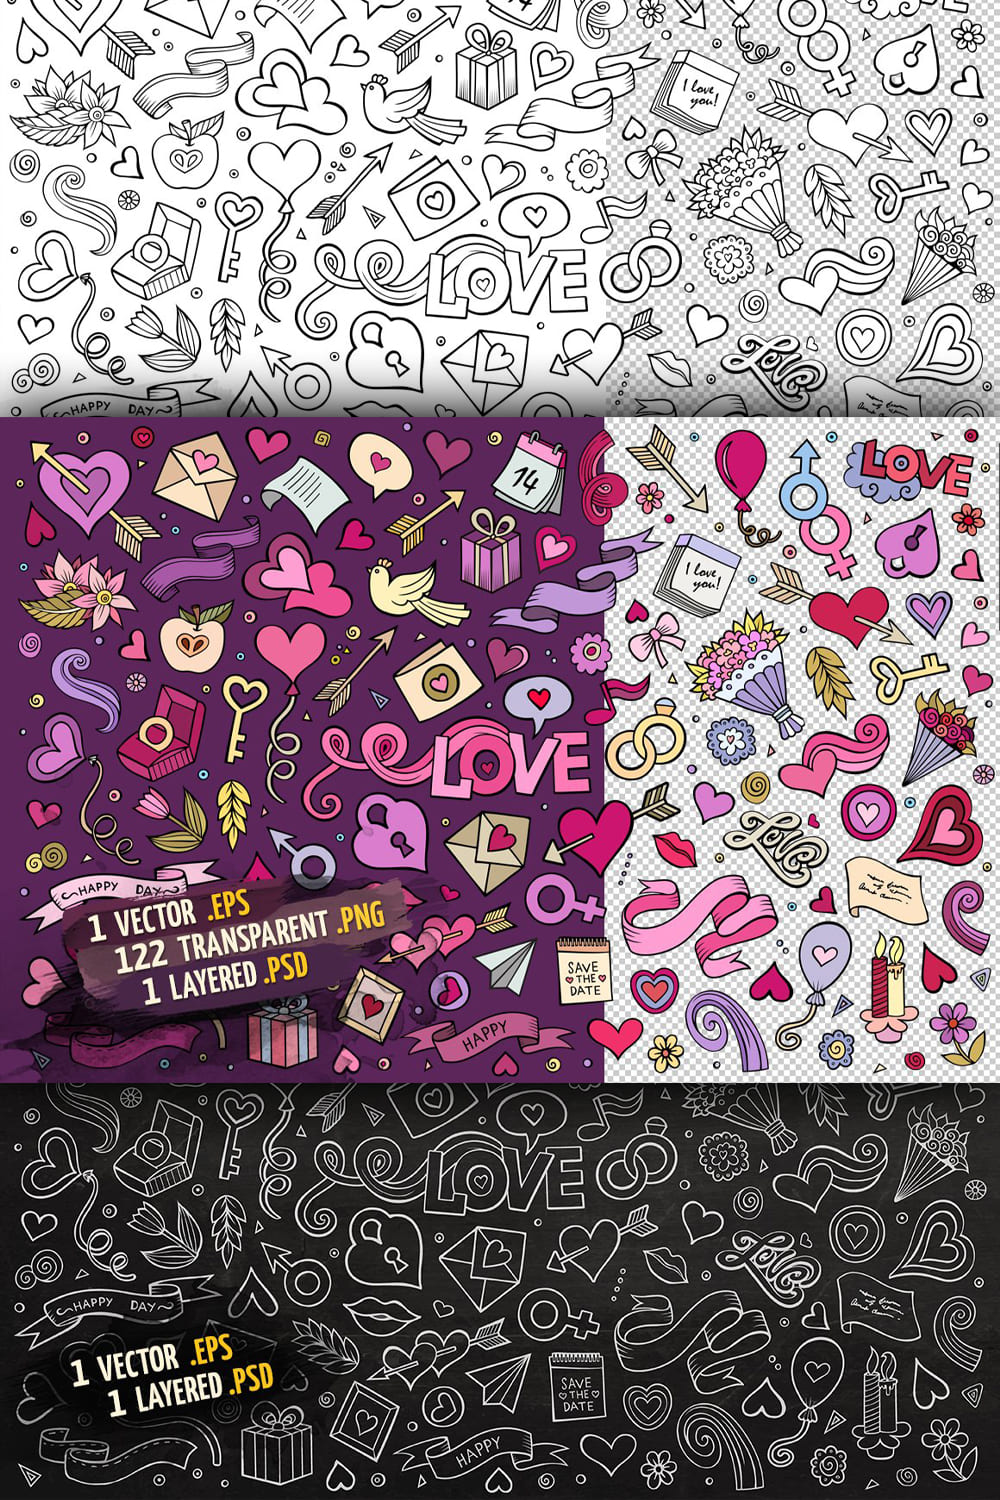 Love Objects Symbols Set Pinterest 1000 1500.